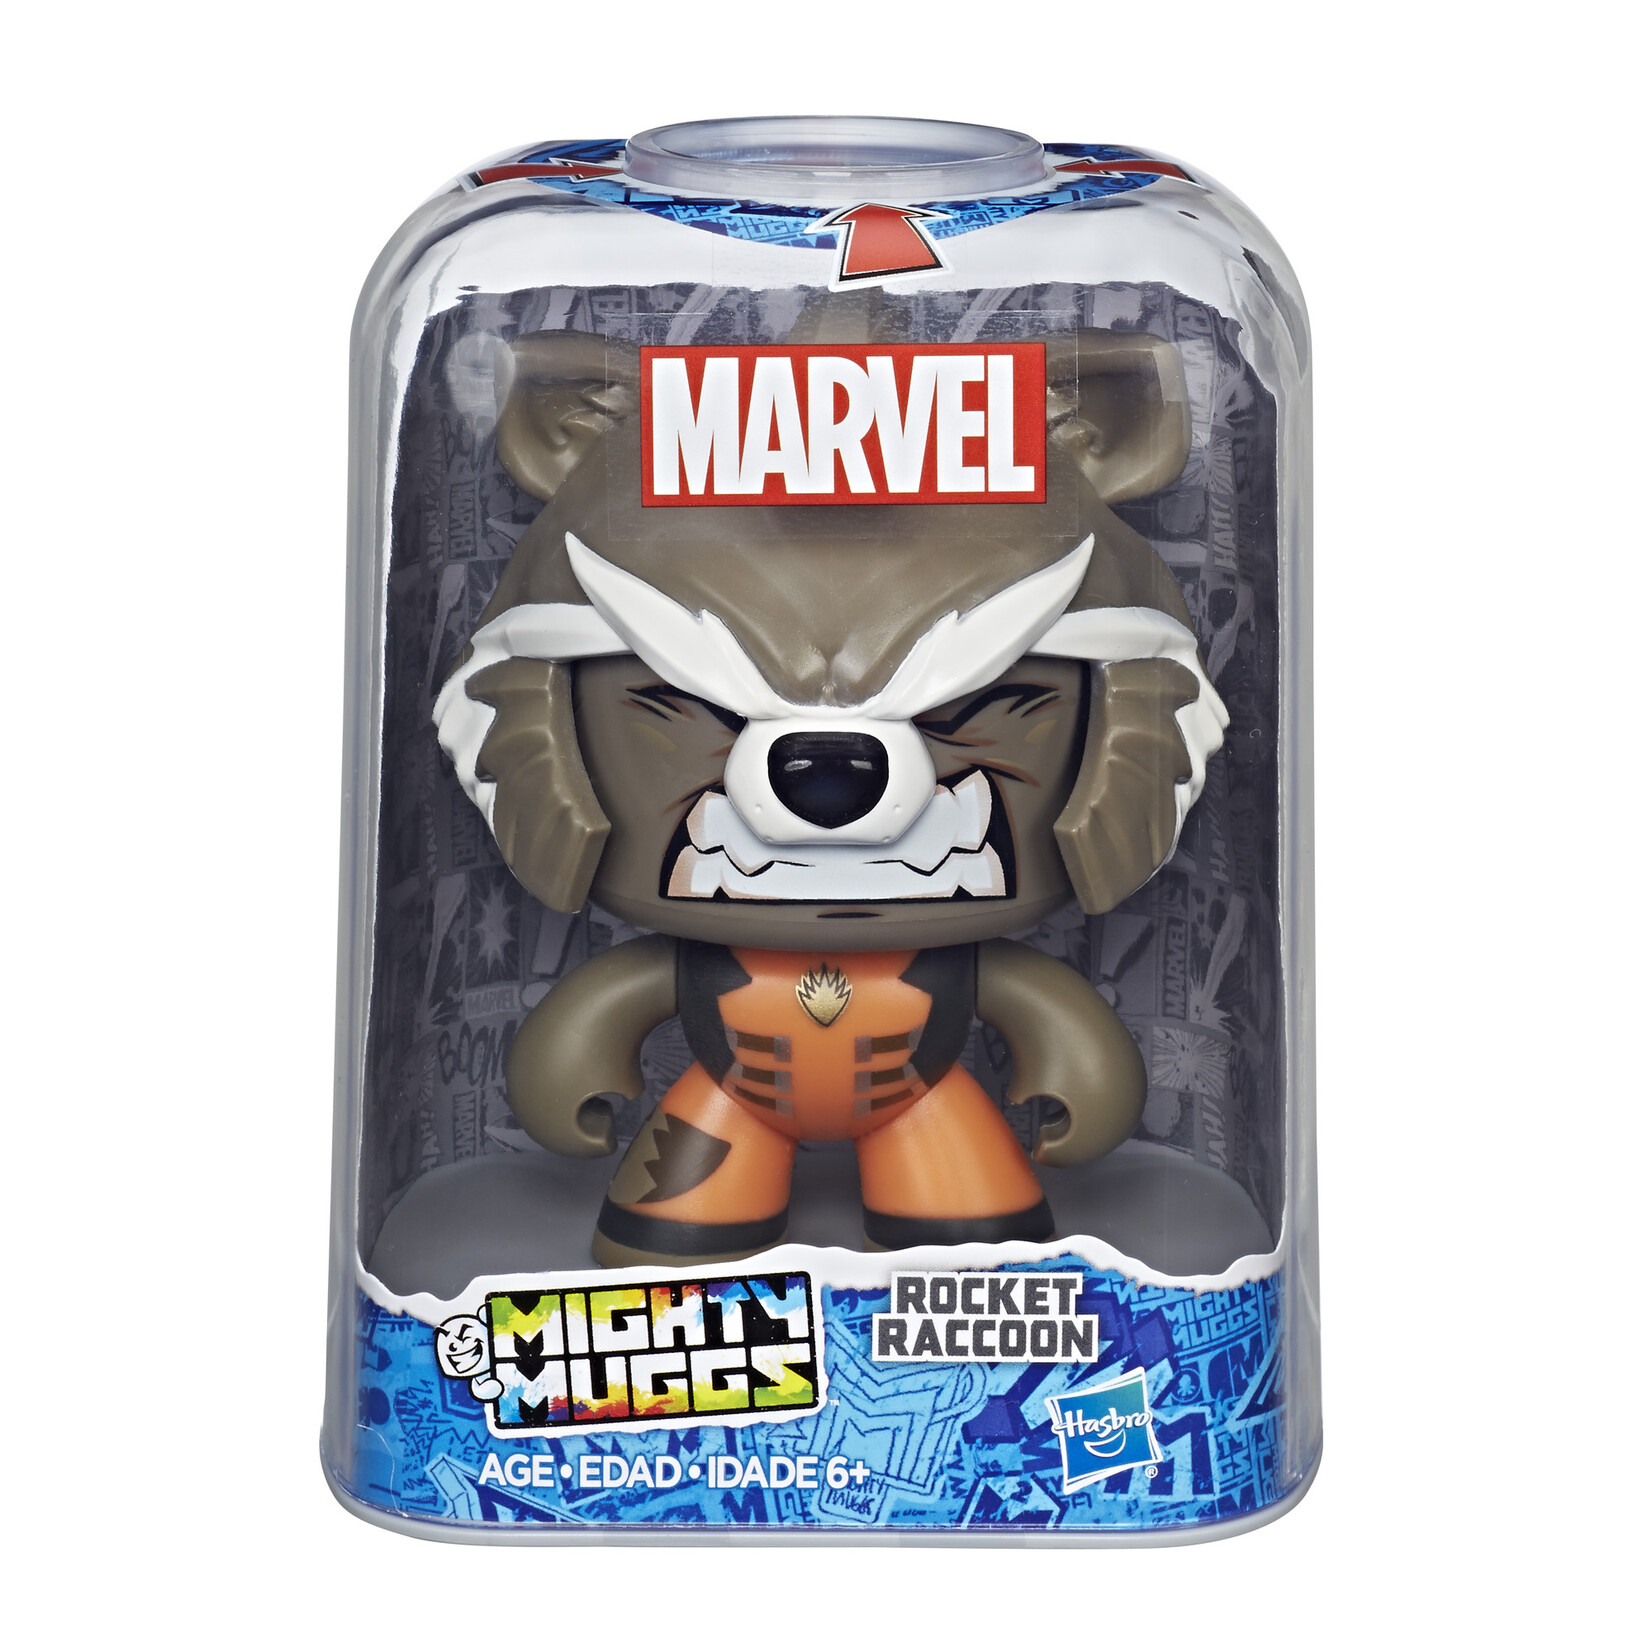 Marvel Mighty Muggs Rocket Raccoon #8